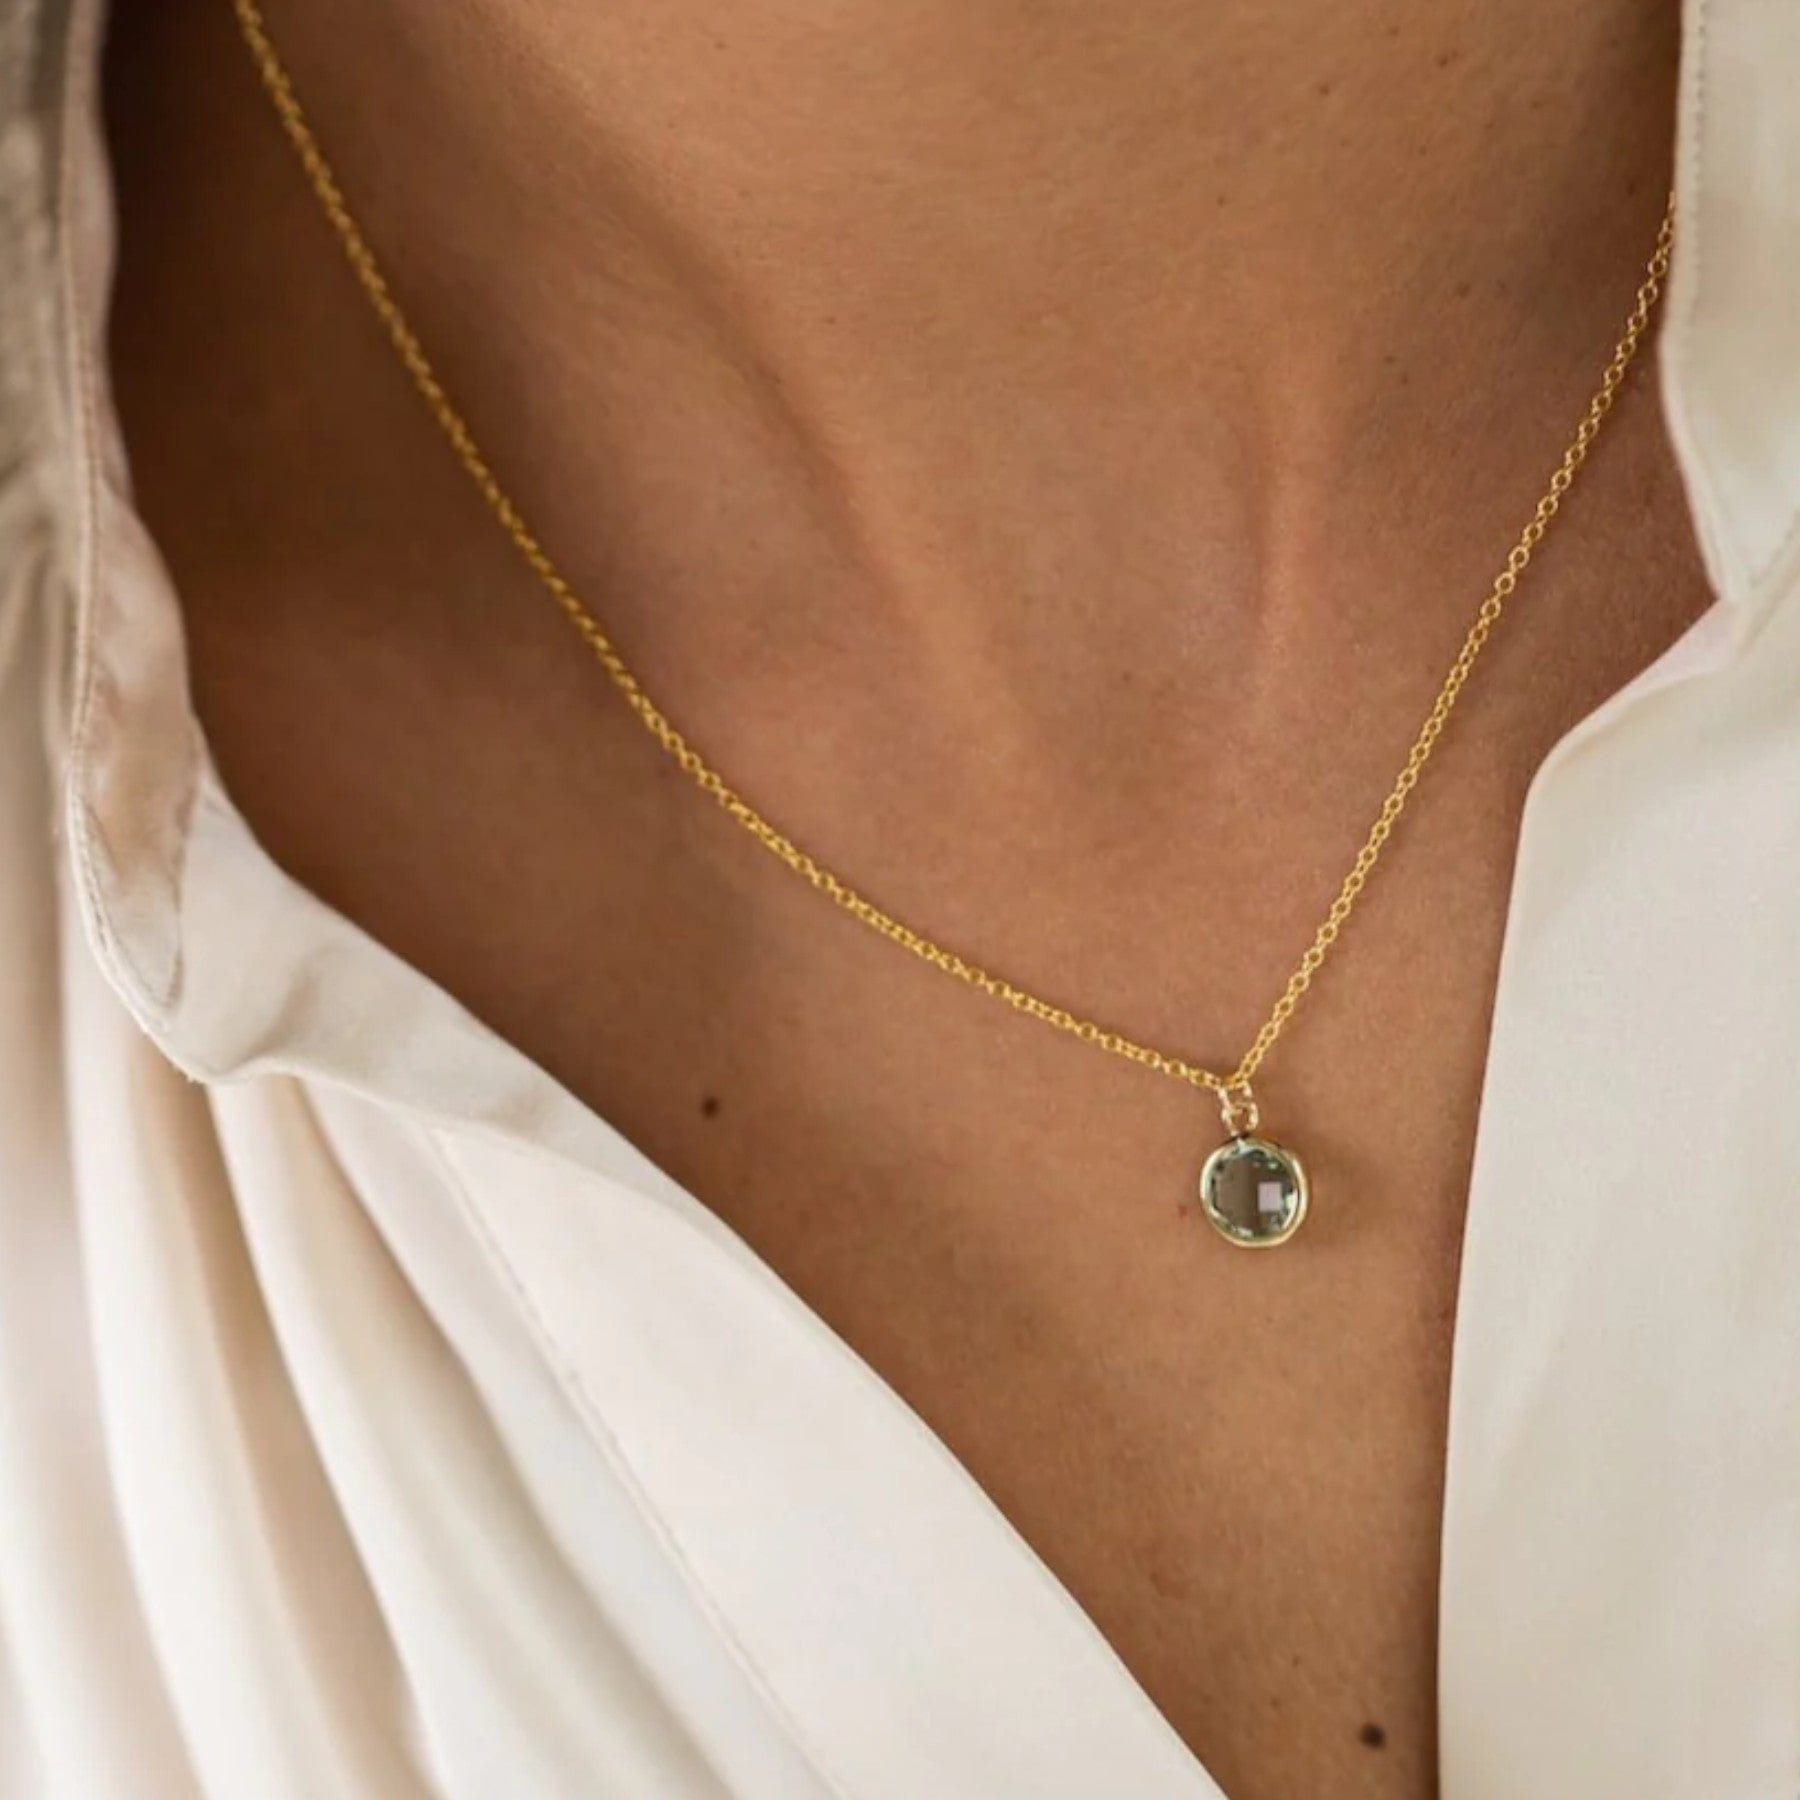 Erinite necklace